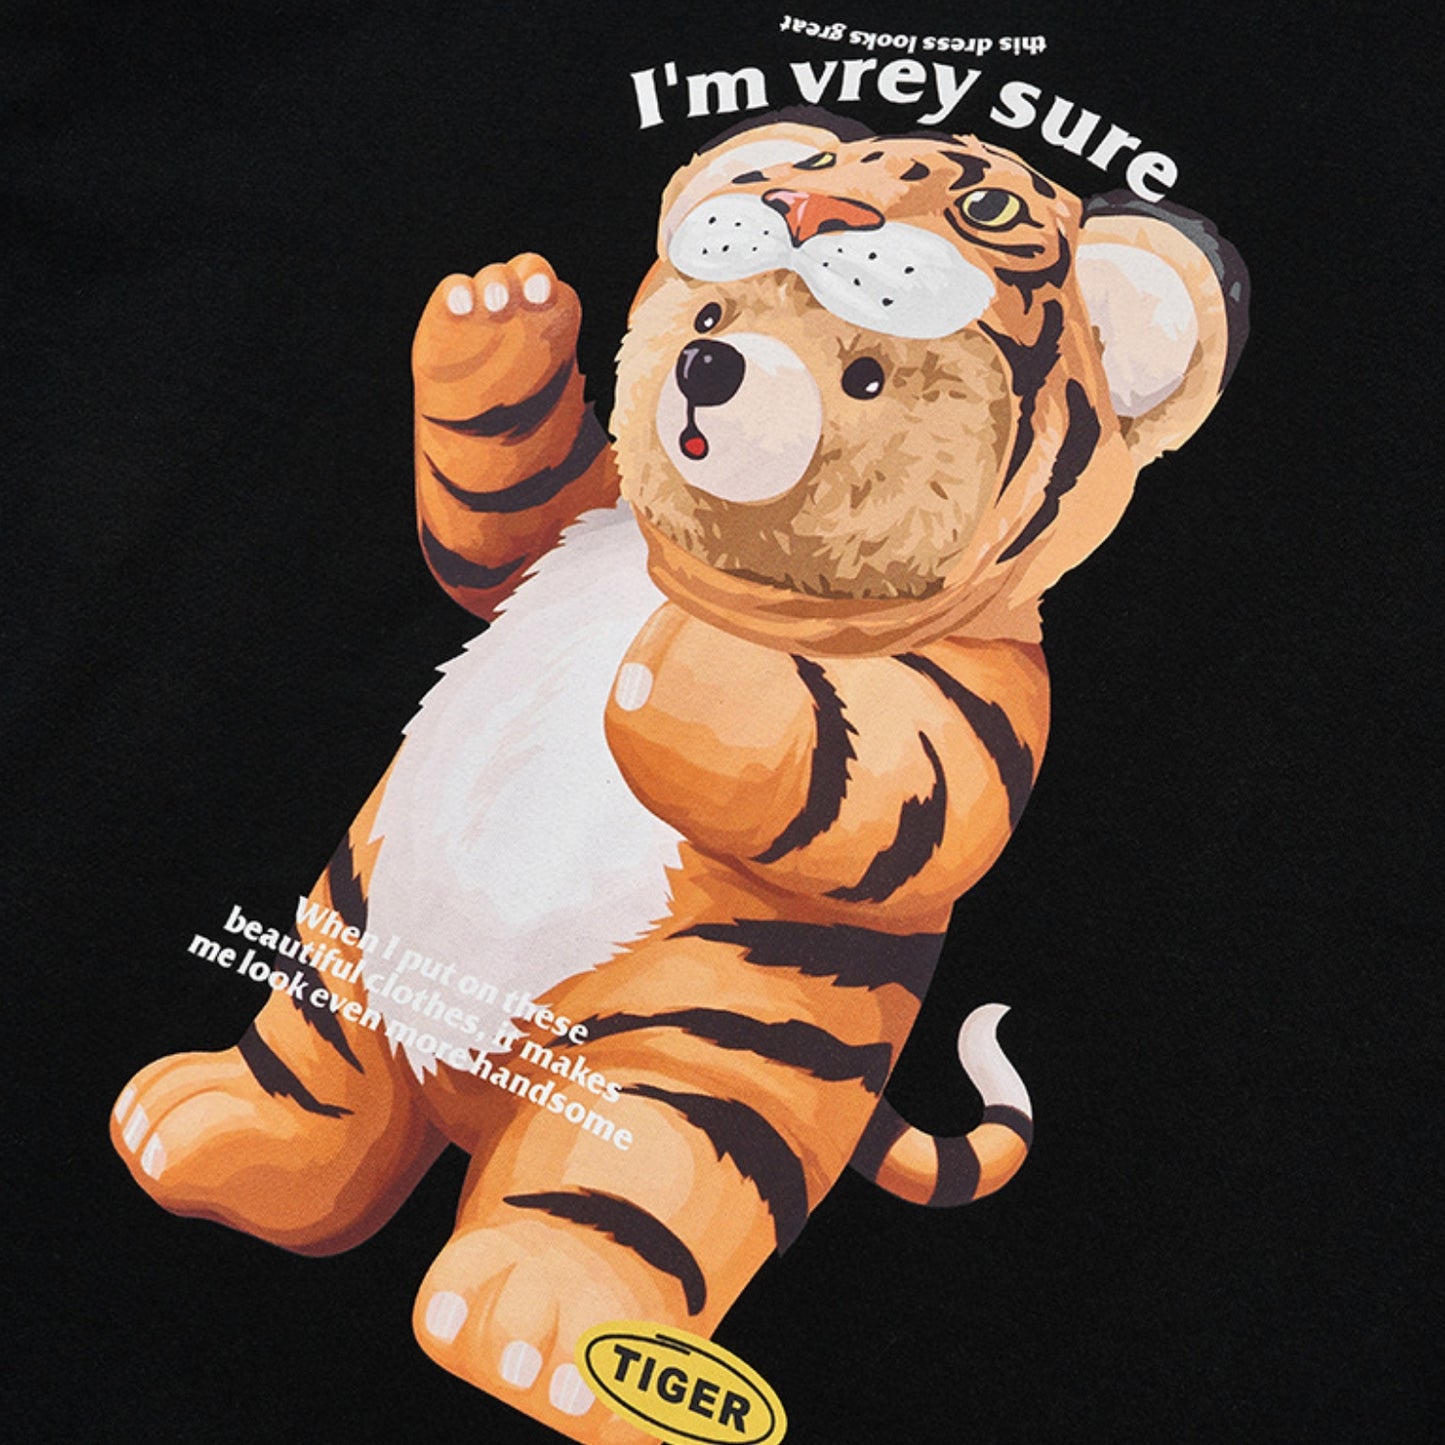 Etiquette Teddy Bear T-shirt